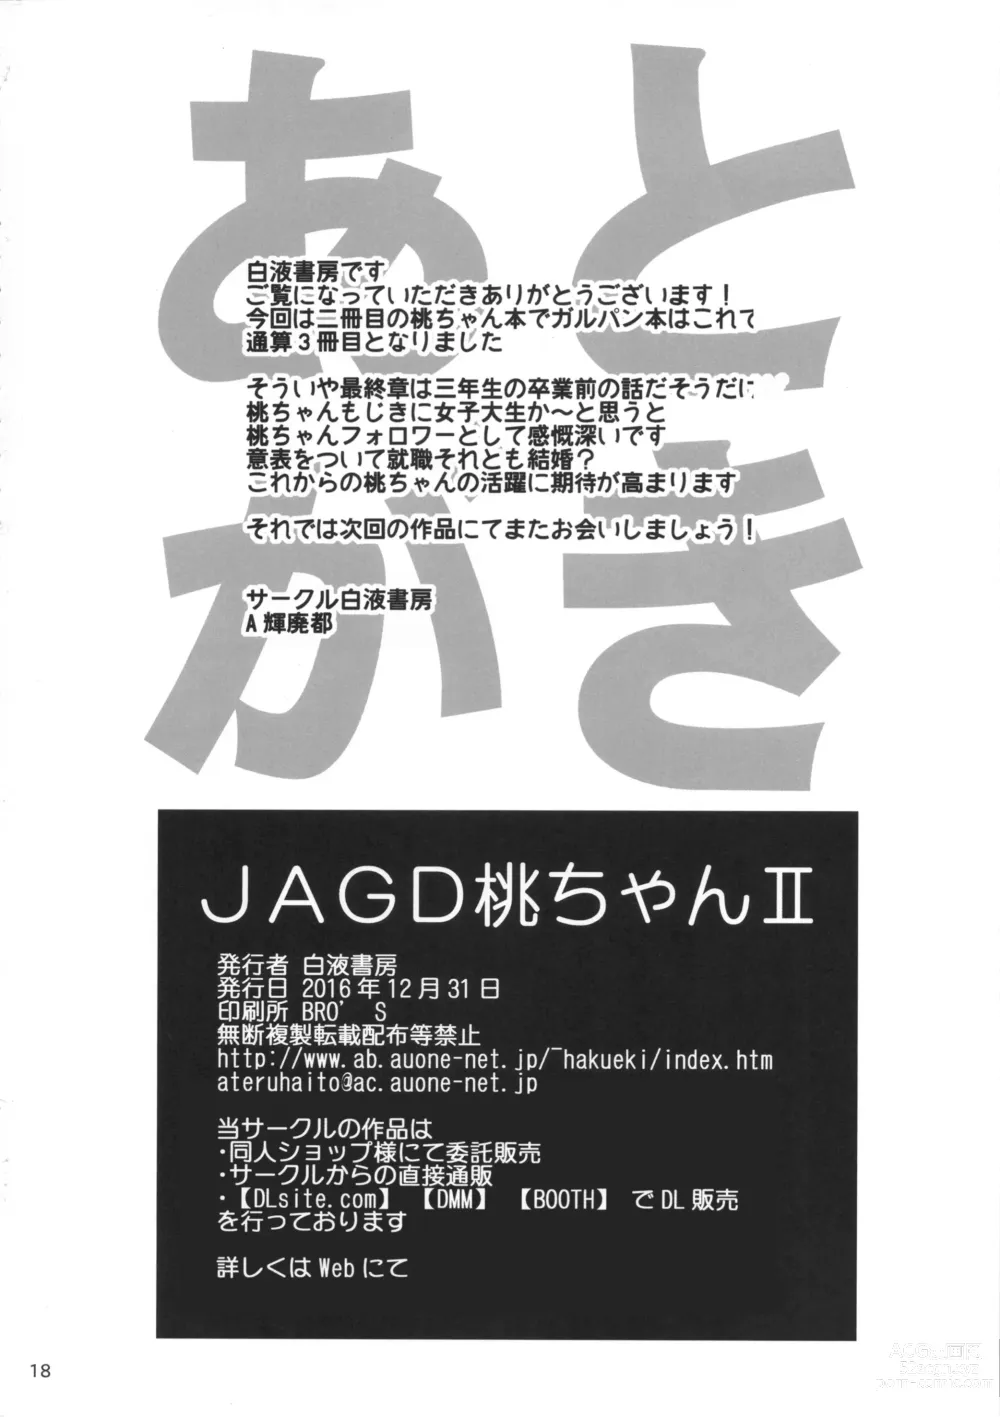 Page 17 of doujinshi JAGD Momo-chan II